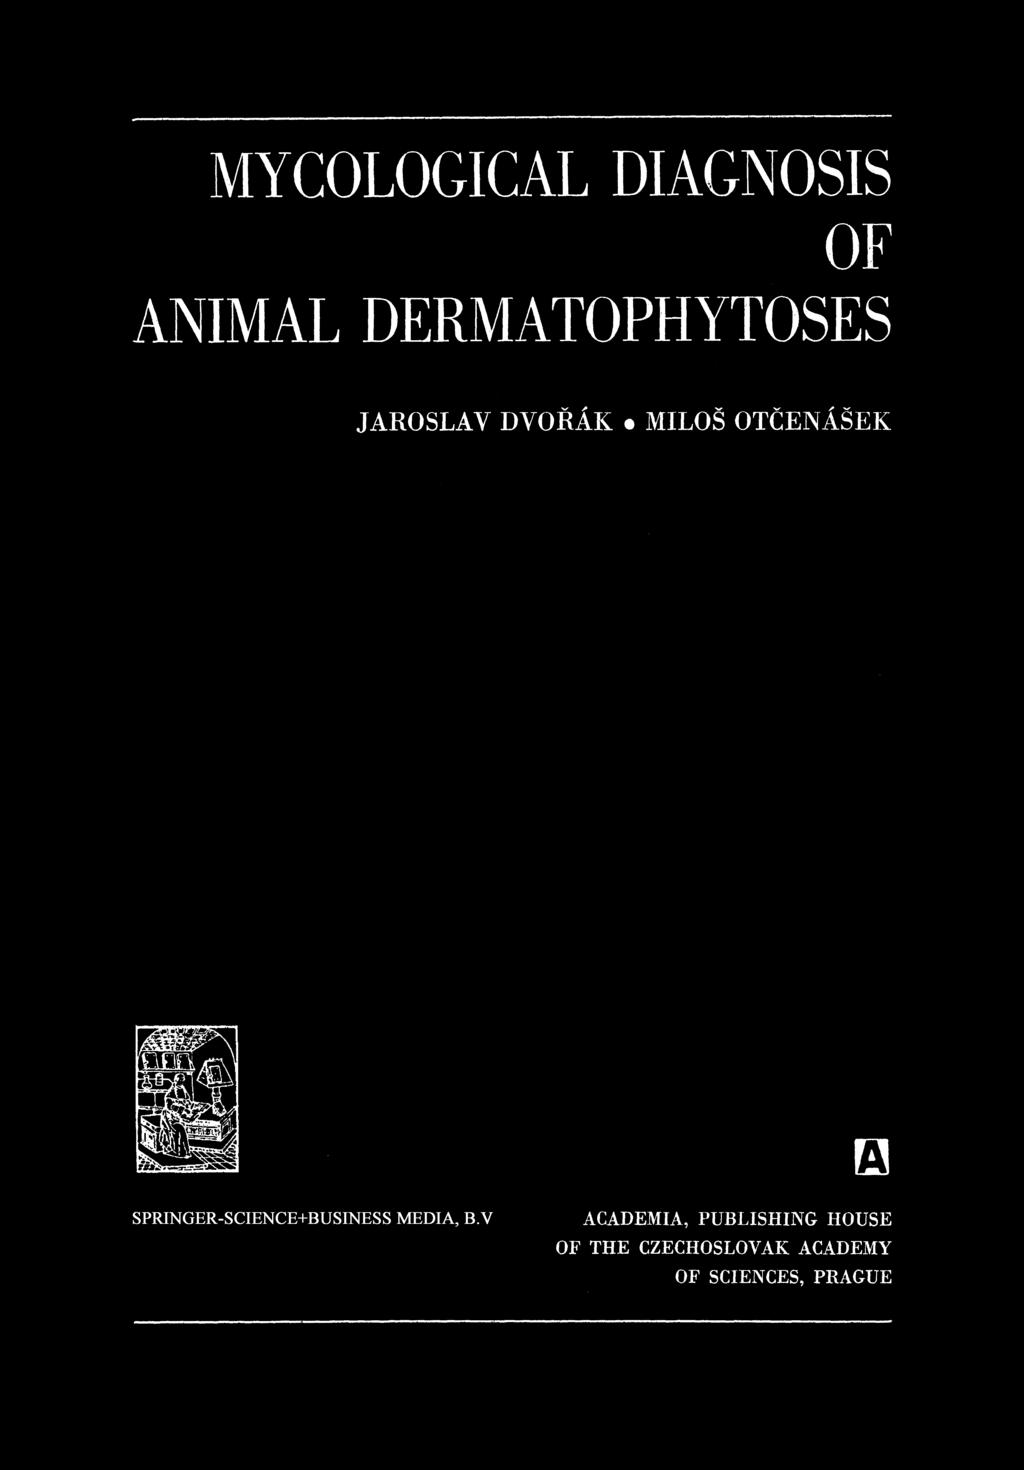 MYCOLOGICAL DIAGNOSIS OF ANIMAL DERMATOPHYTOSES